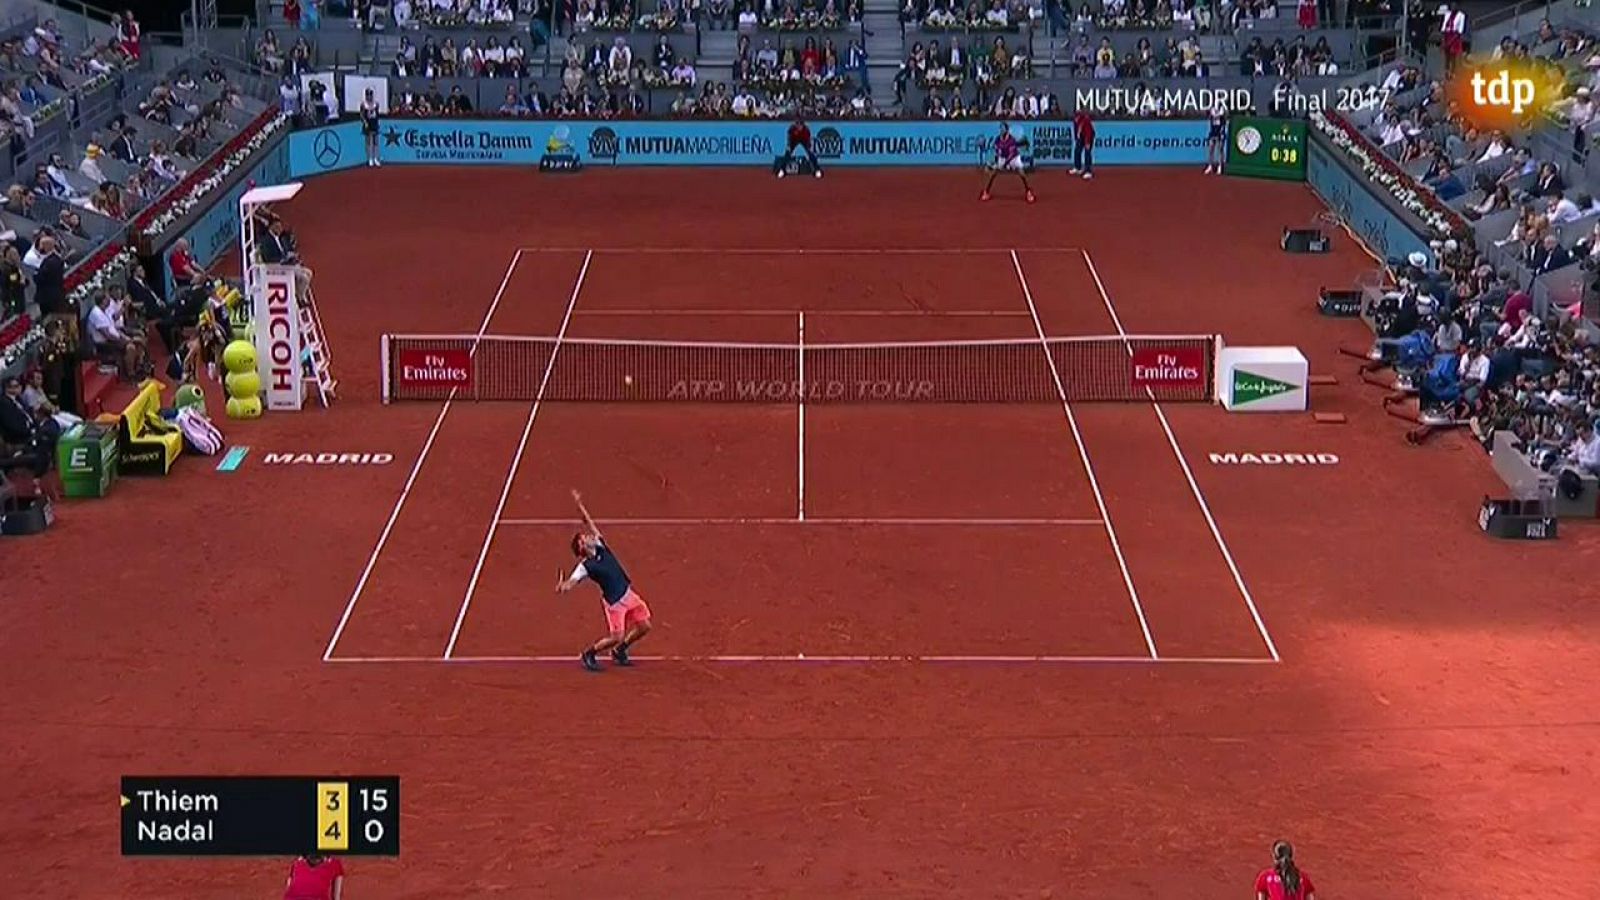 TDP en casa - Tenis - Final Mutua Madrid Open 2017: Rafa Nadal - Dominic Thiem